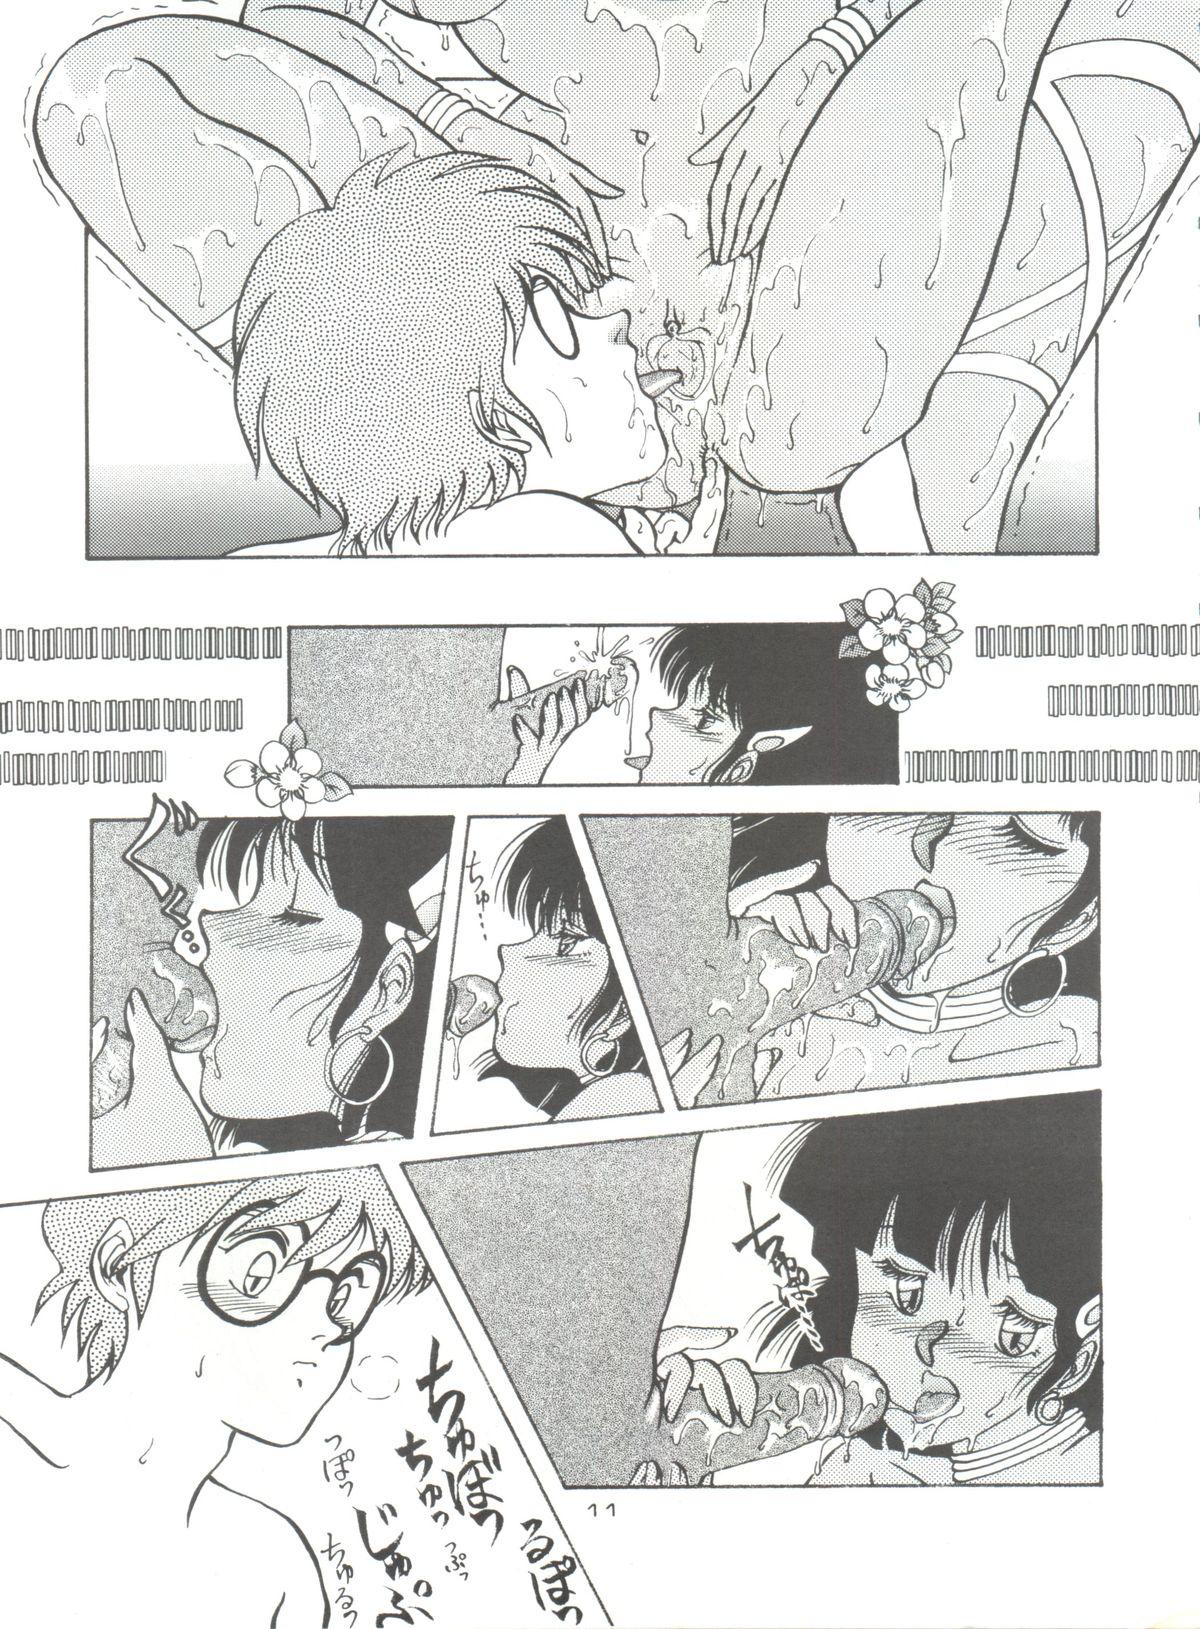 Secret Nadia Girls in Emerald Sea vol. 2 - Minies Club 23 - Fushigi no umi no nadia Family - Page 11